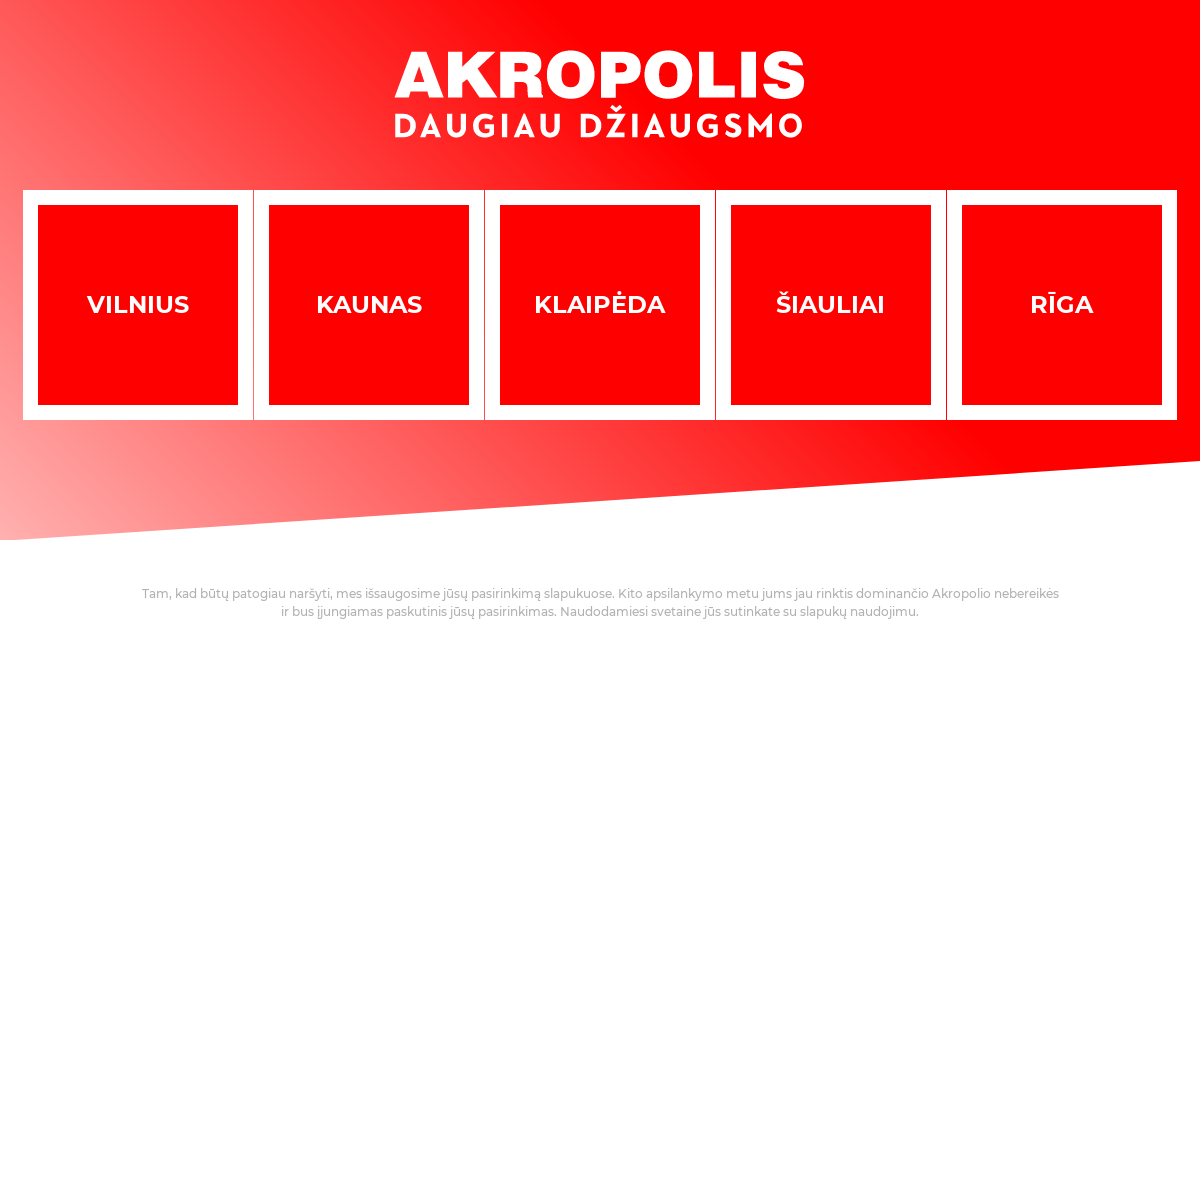 A complete backup of akropolis.lt